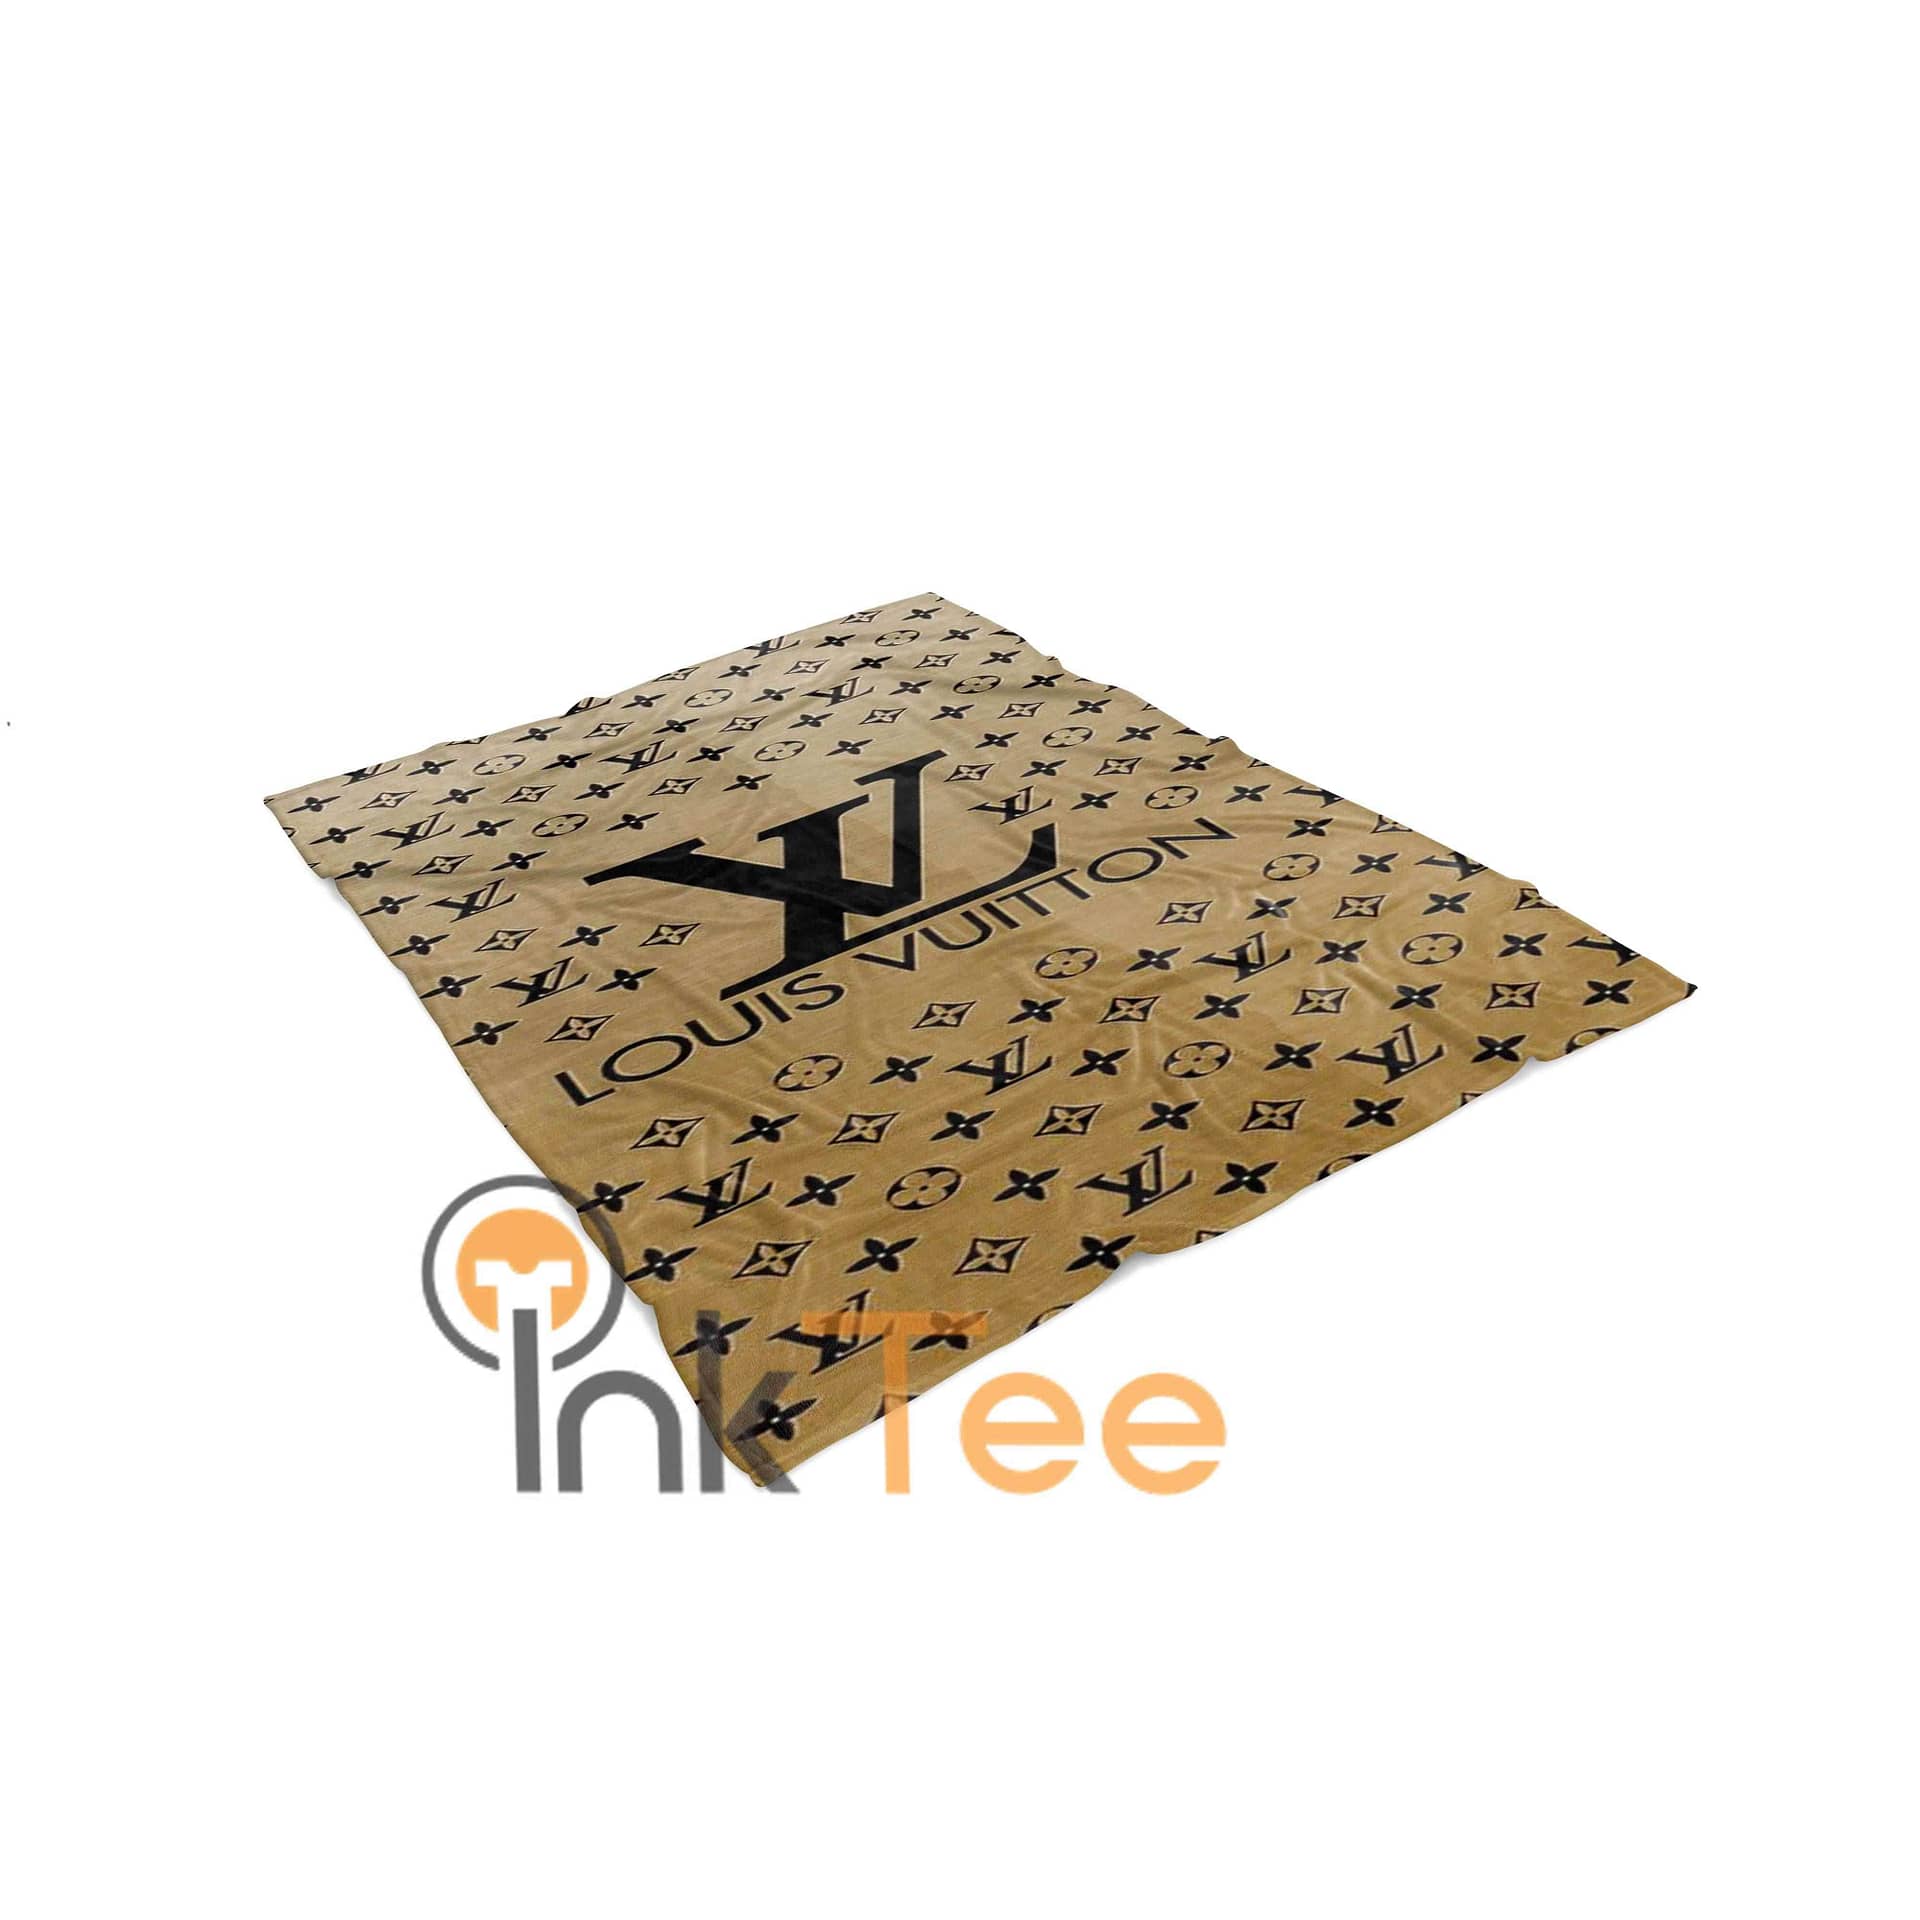 Inktee Store - Louis Vuitton Limited Edition Amazon Best Seller Sku 4065 Fleece Blanket Image